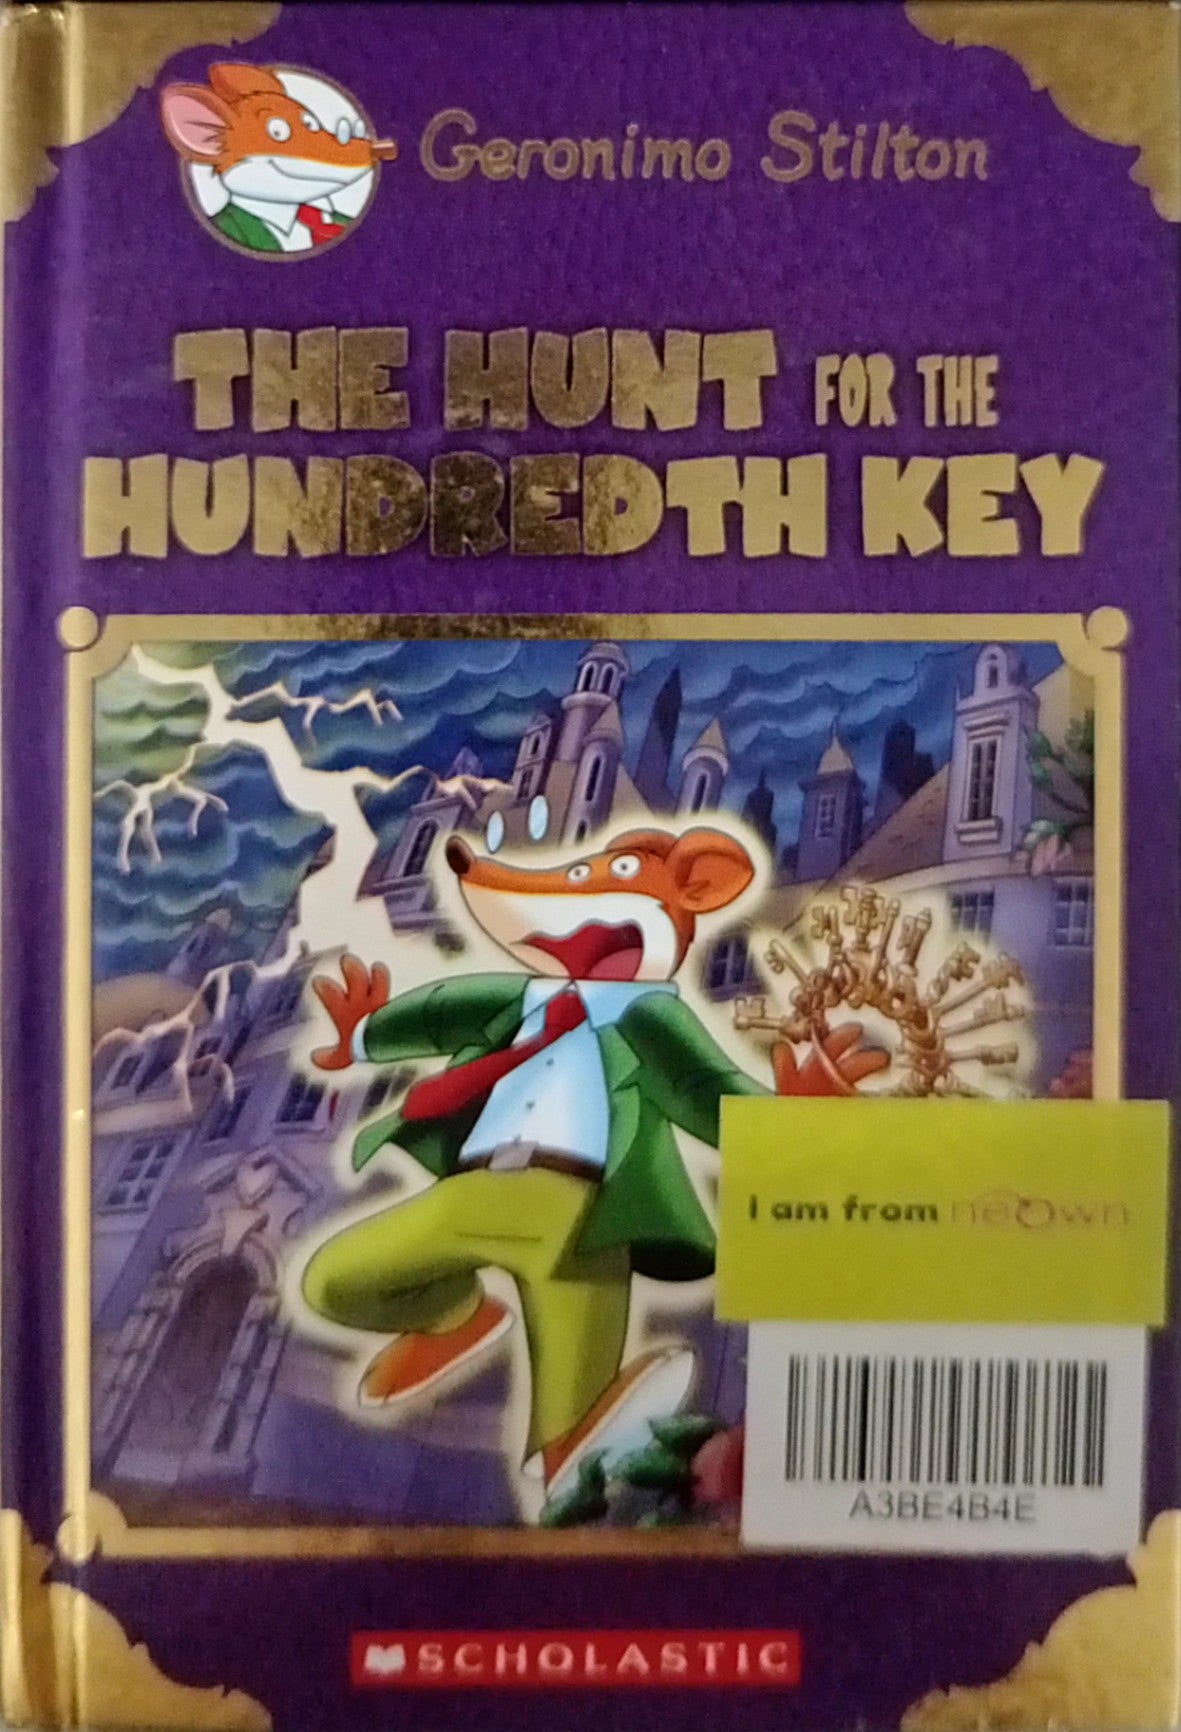 Geronimo Stillton-The Hunt for the Hundredth Key